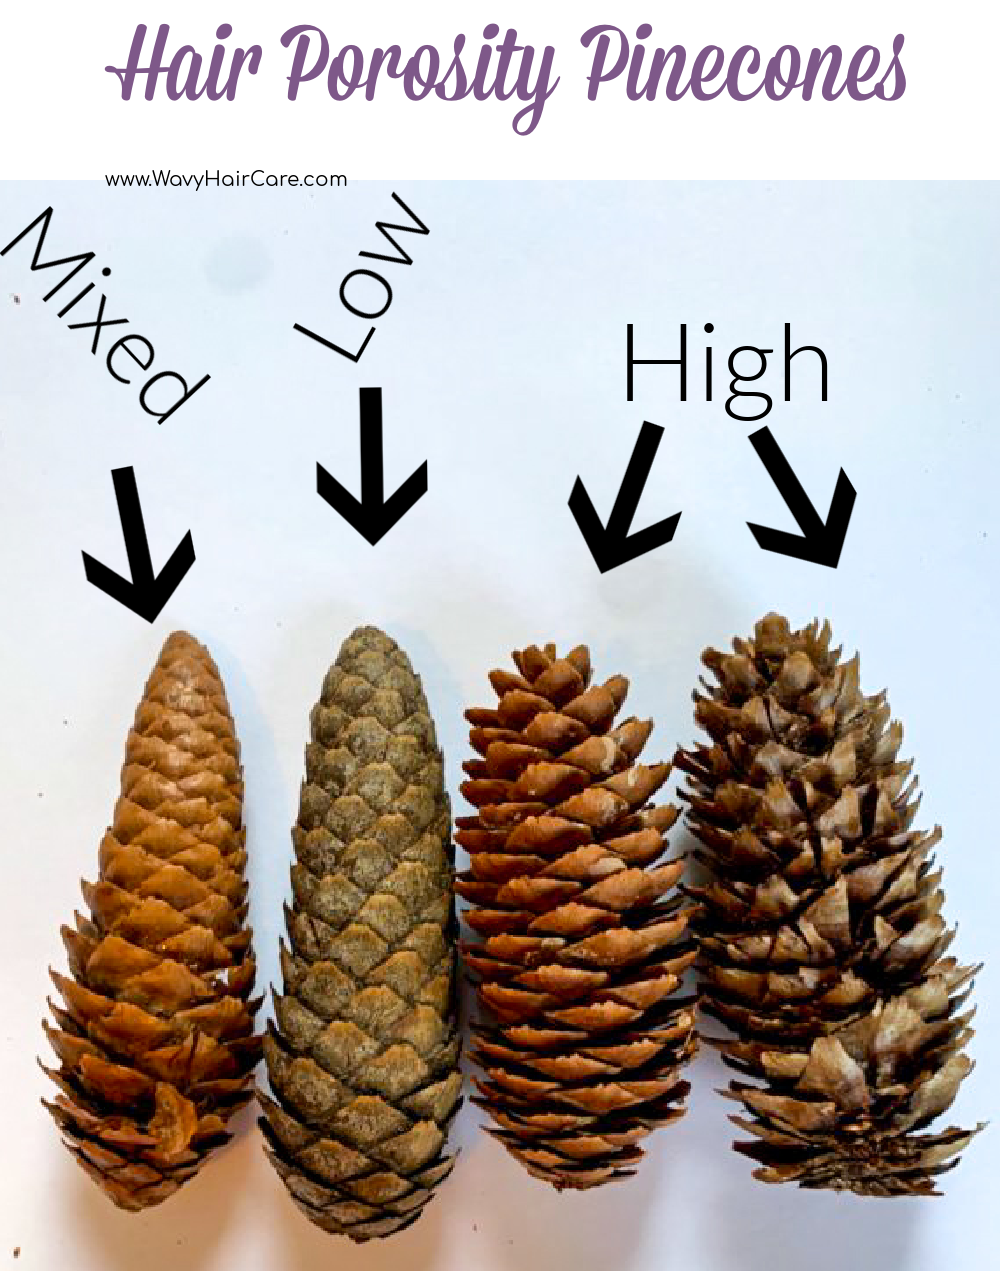 hair porosity pinecone analogy 